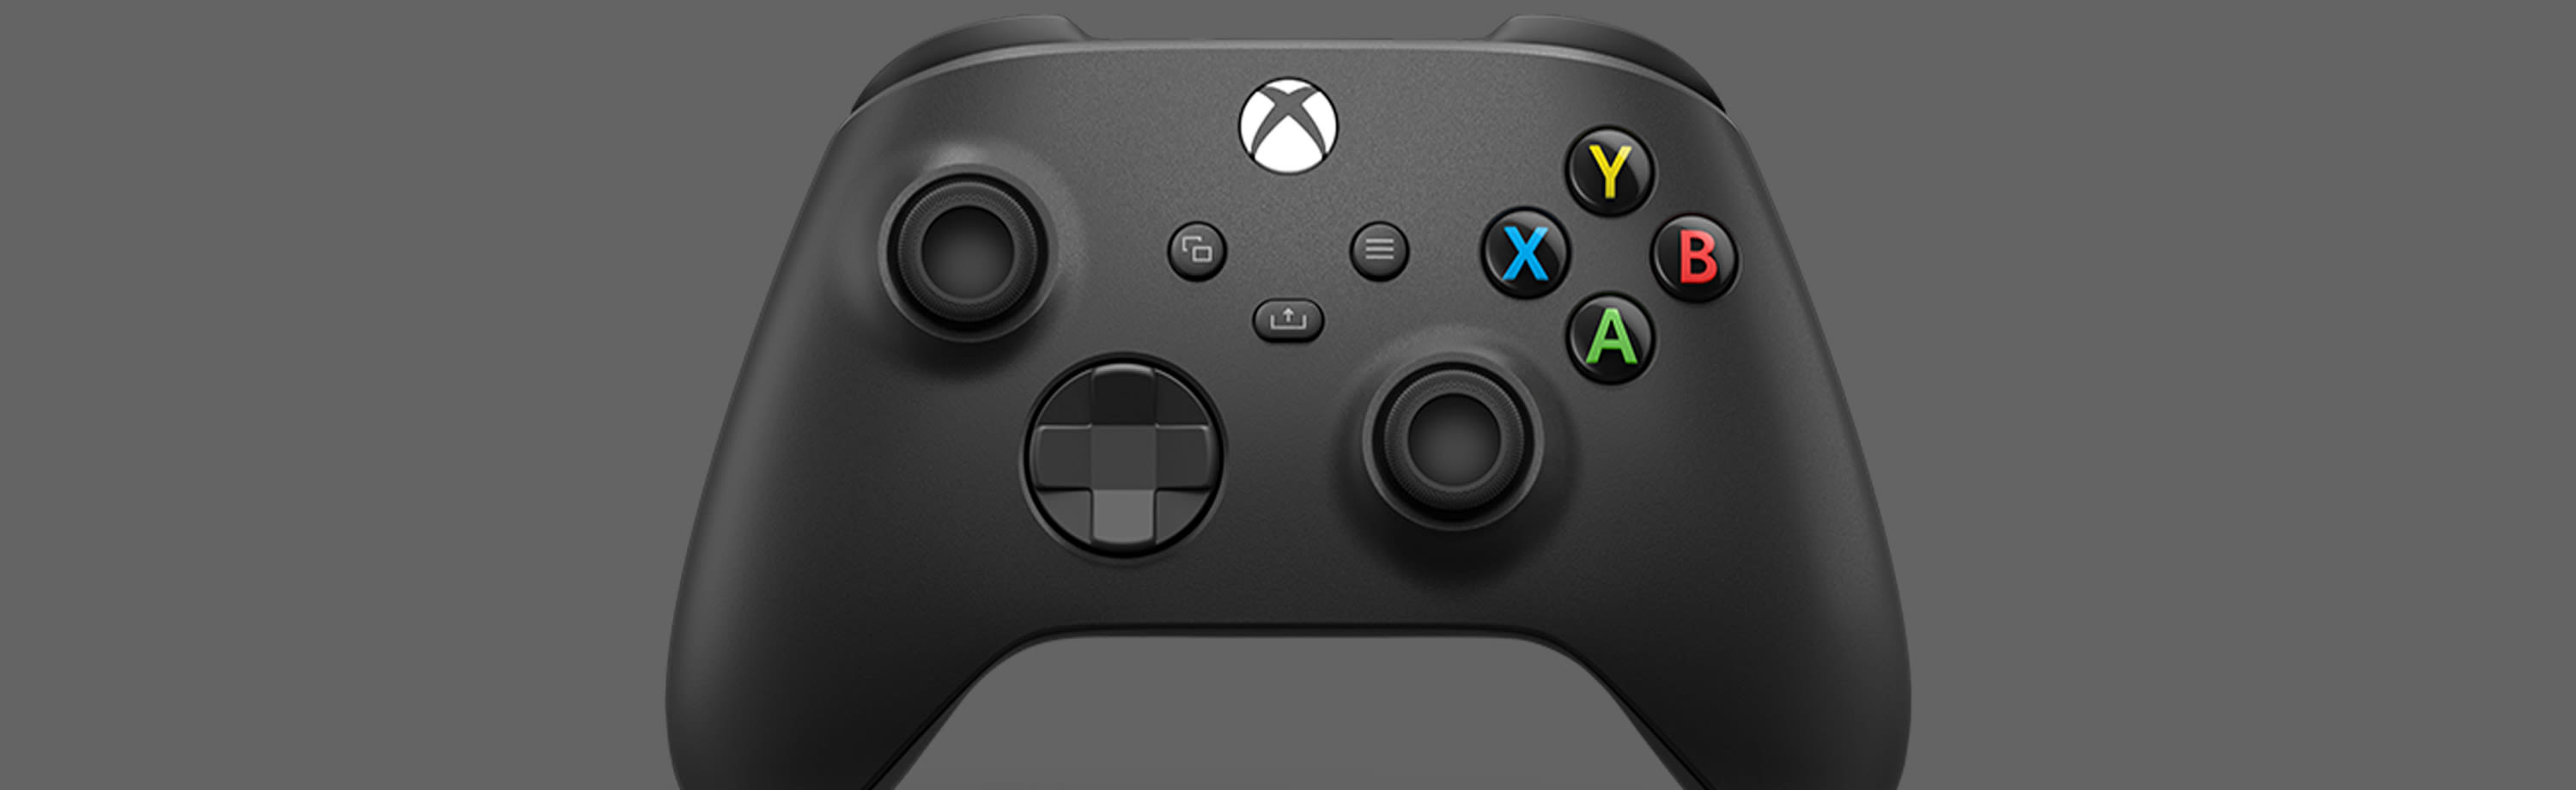 New Design of the Black Xbox Wireless Controller